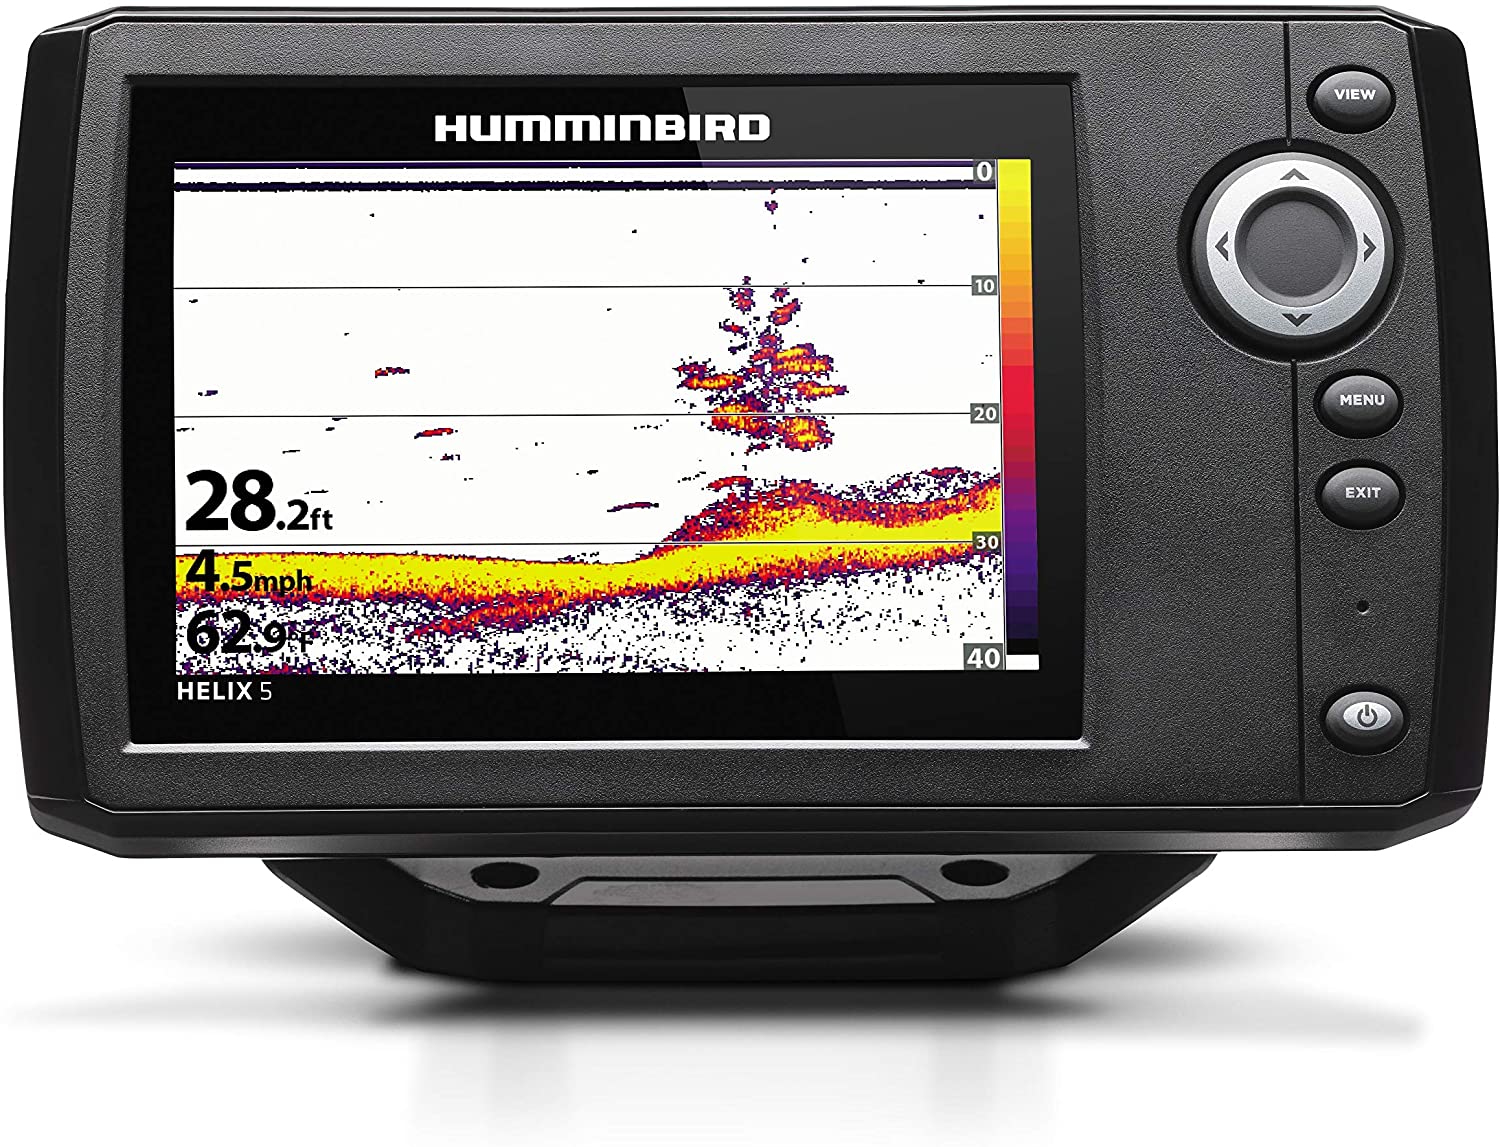 Humminbird Helix 5 sonar is the best fish finder